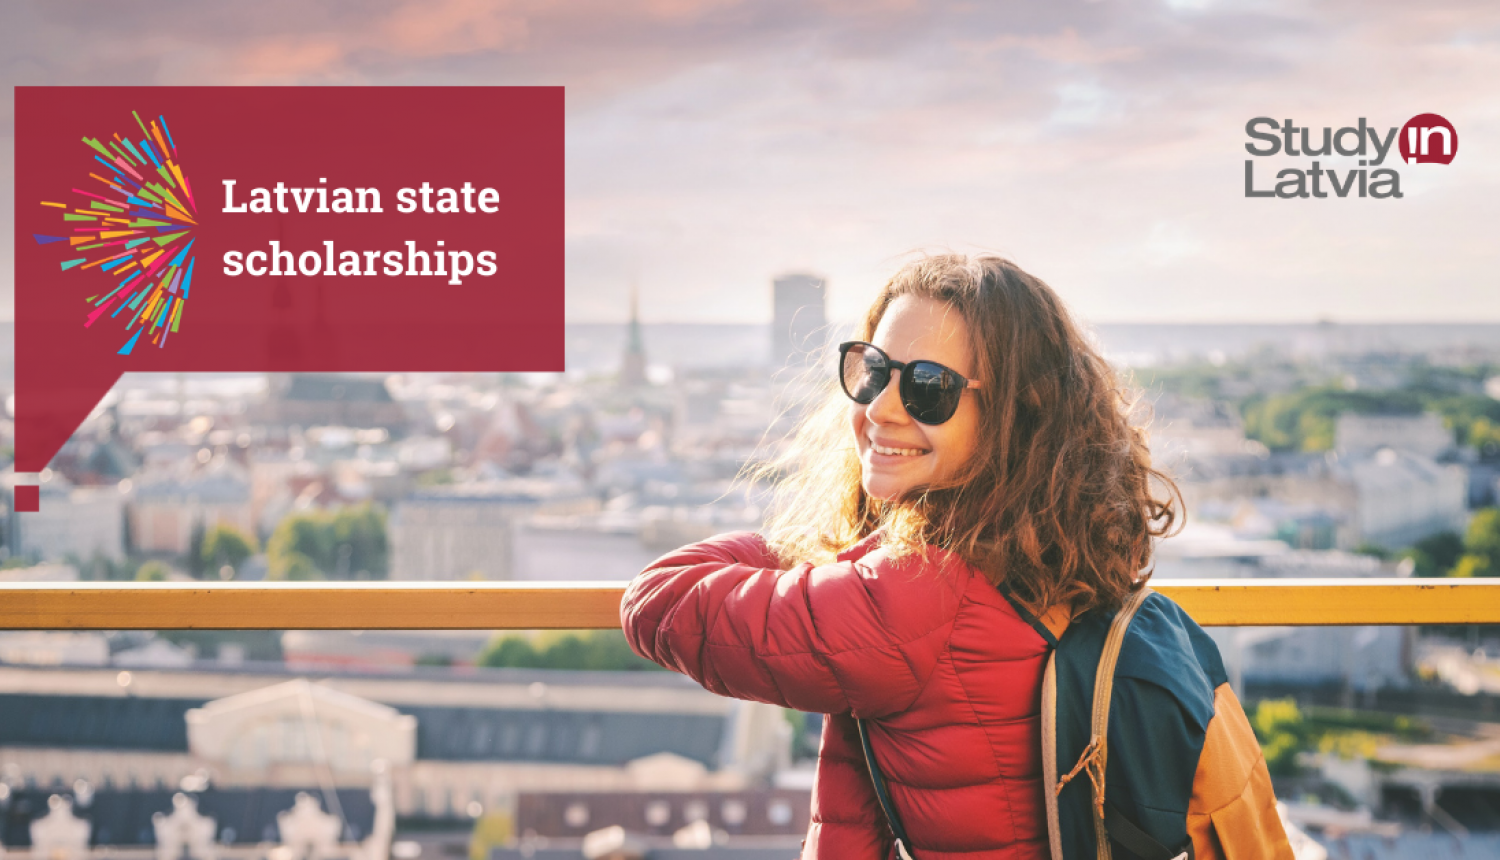 Latvian state scholarships